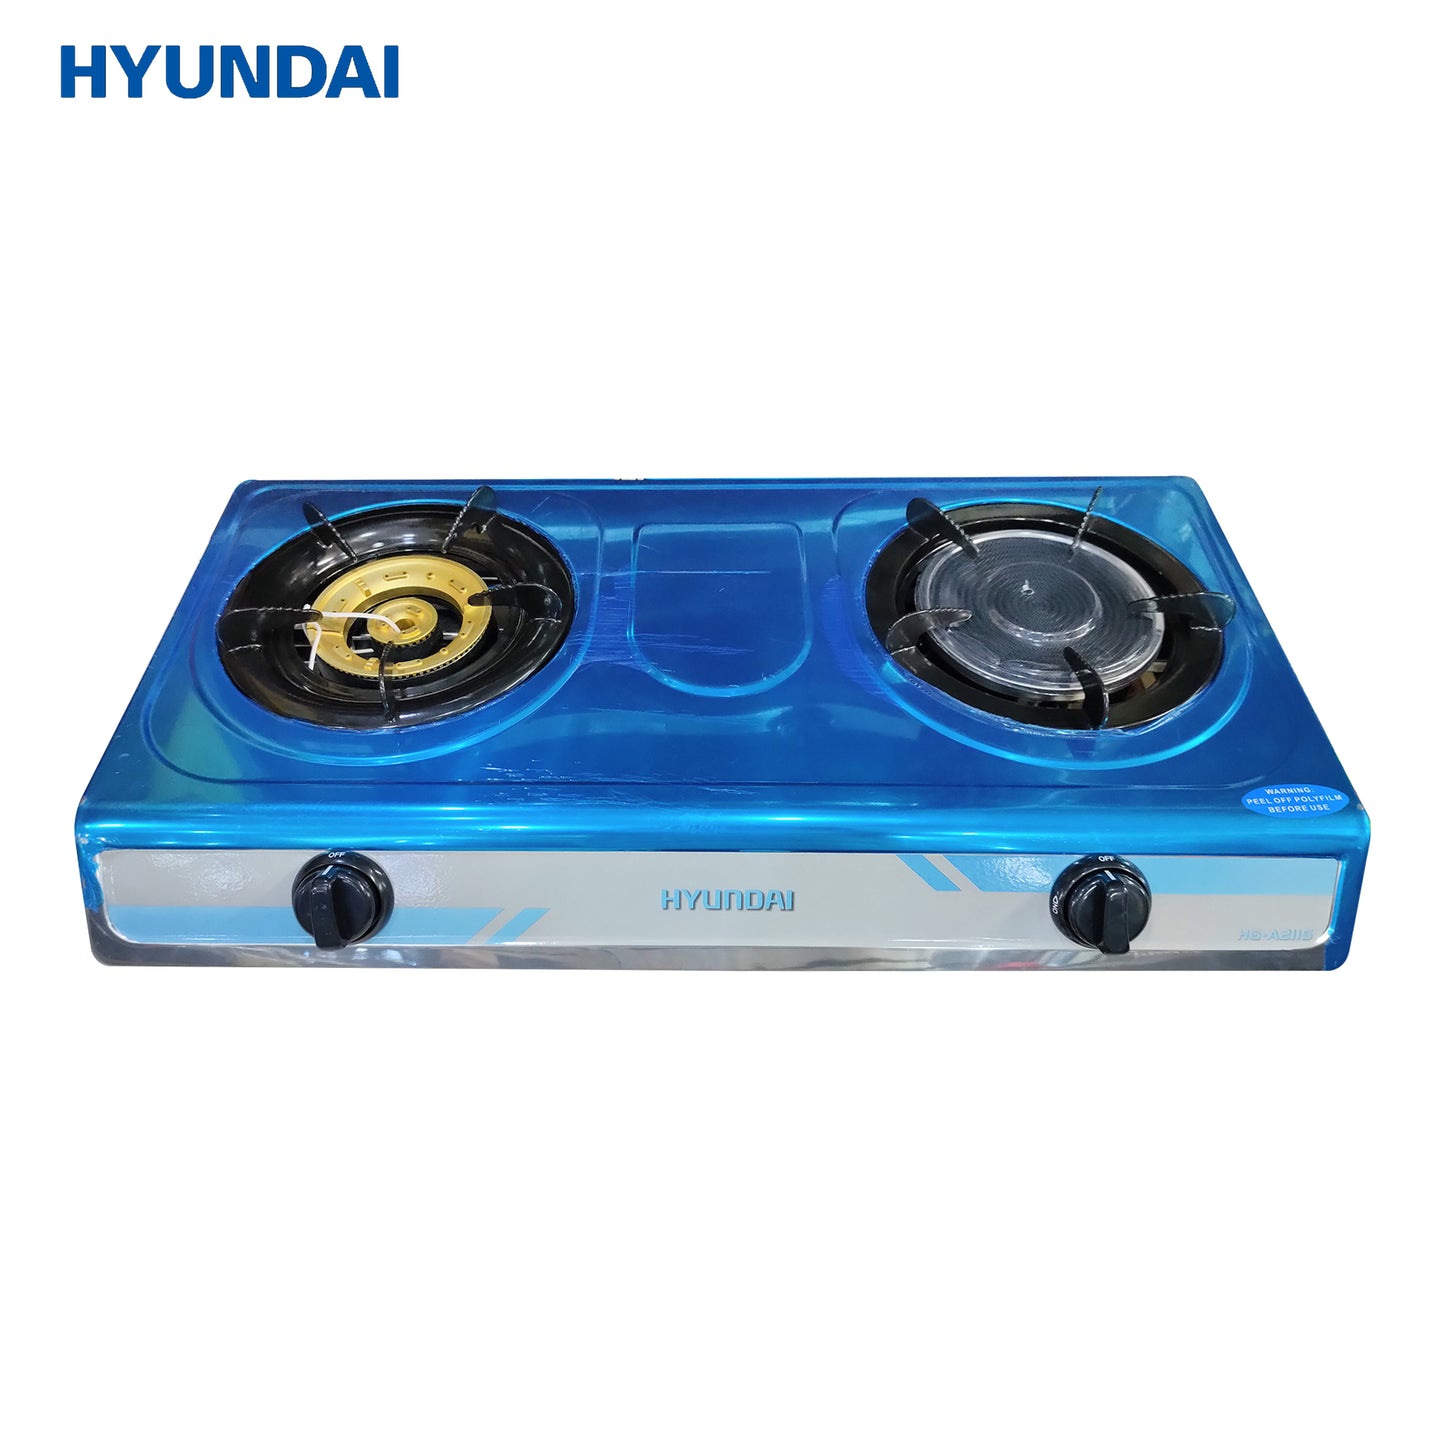 Hyundai Double Burner Gas Stove - HG-A211S